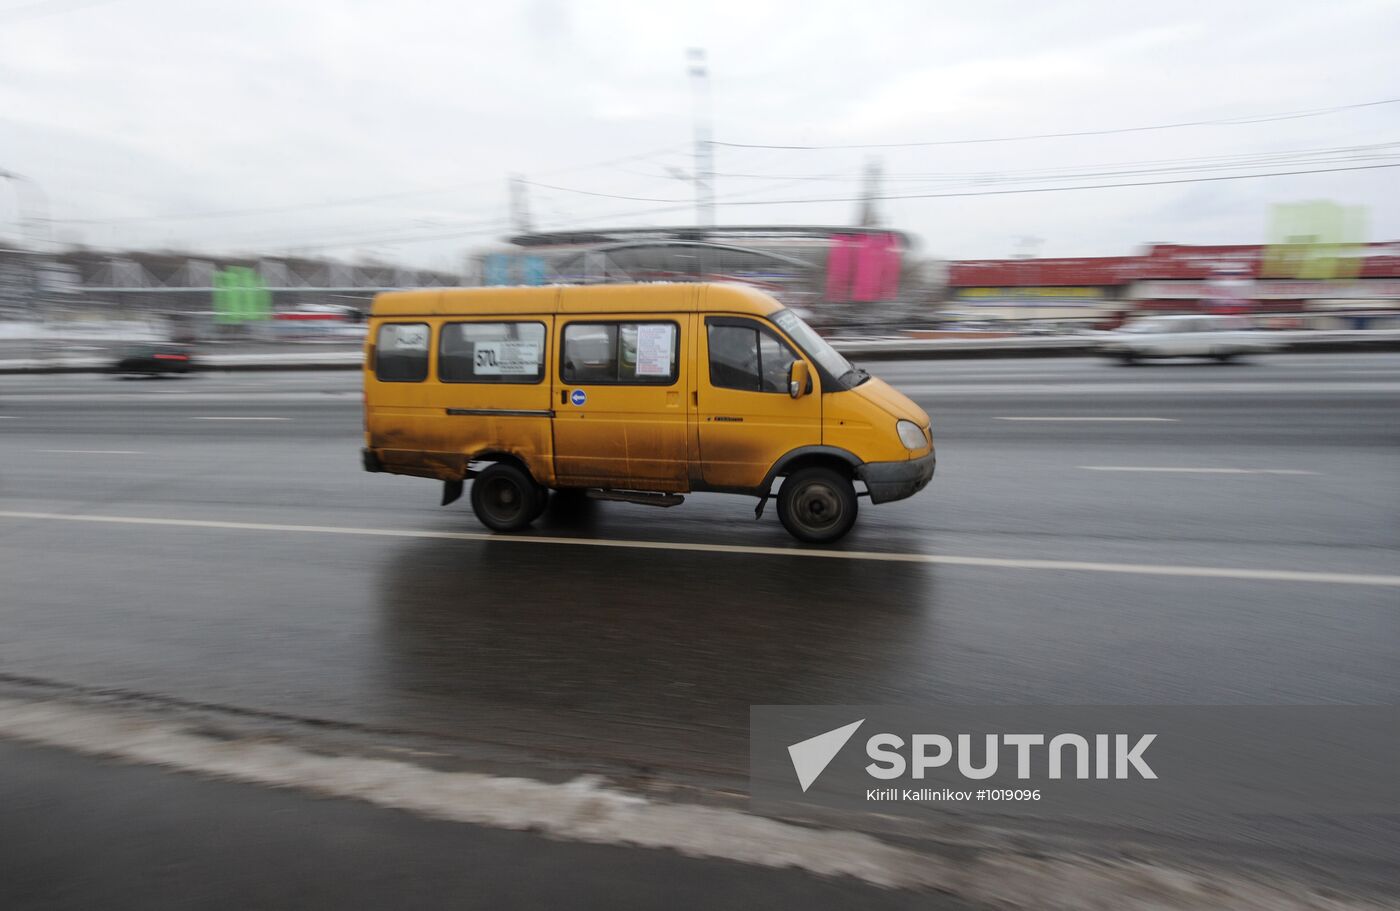 Shuttle vans in Moscow